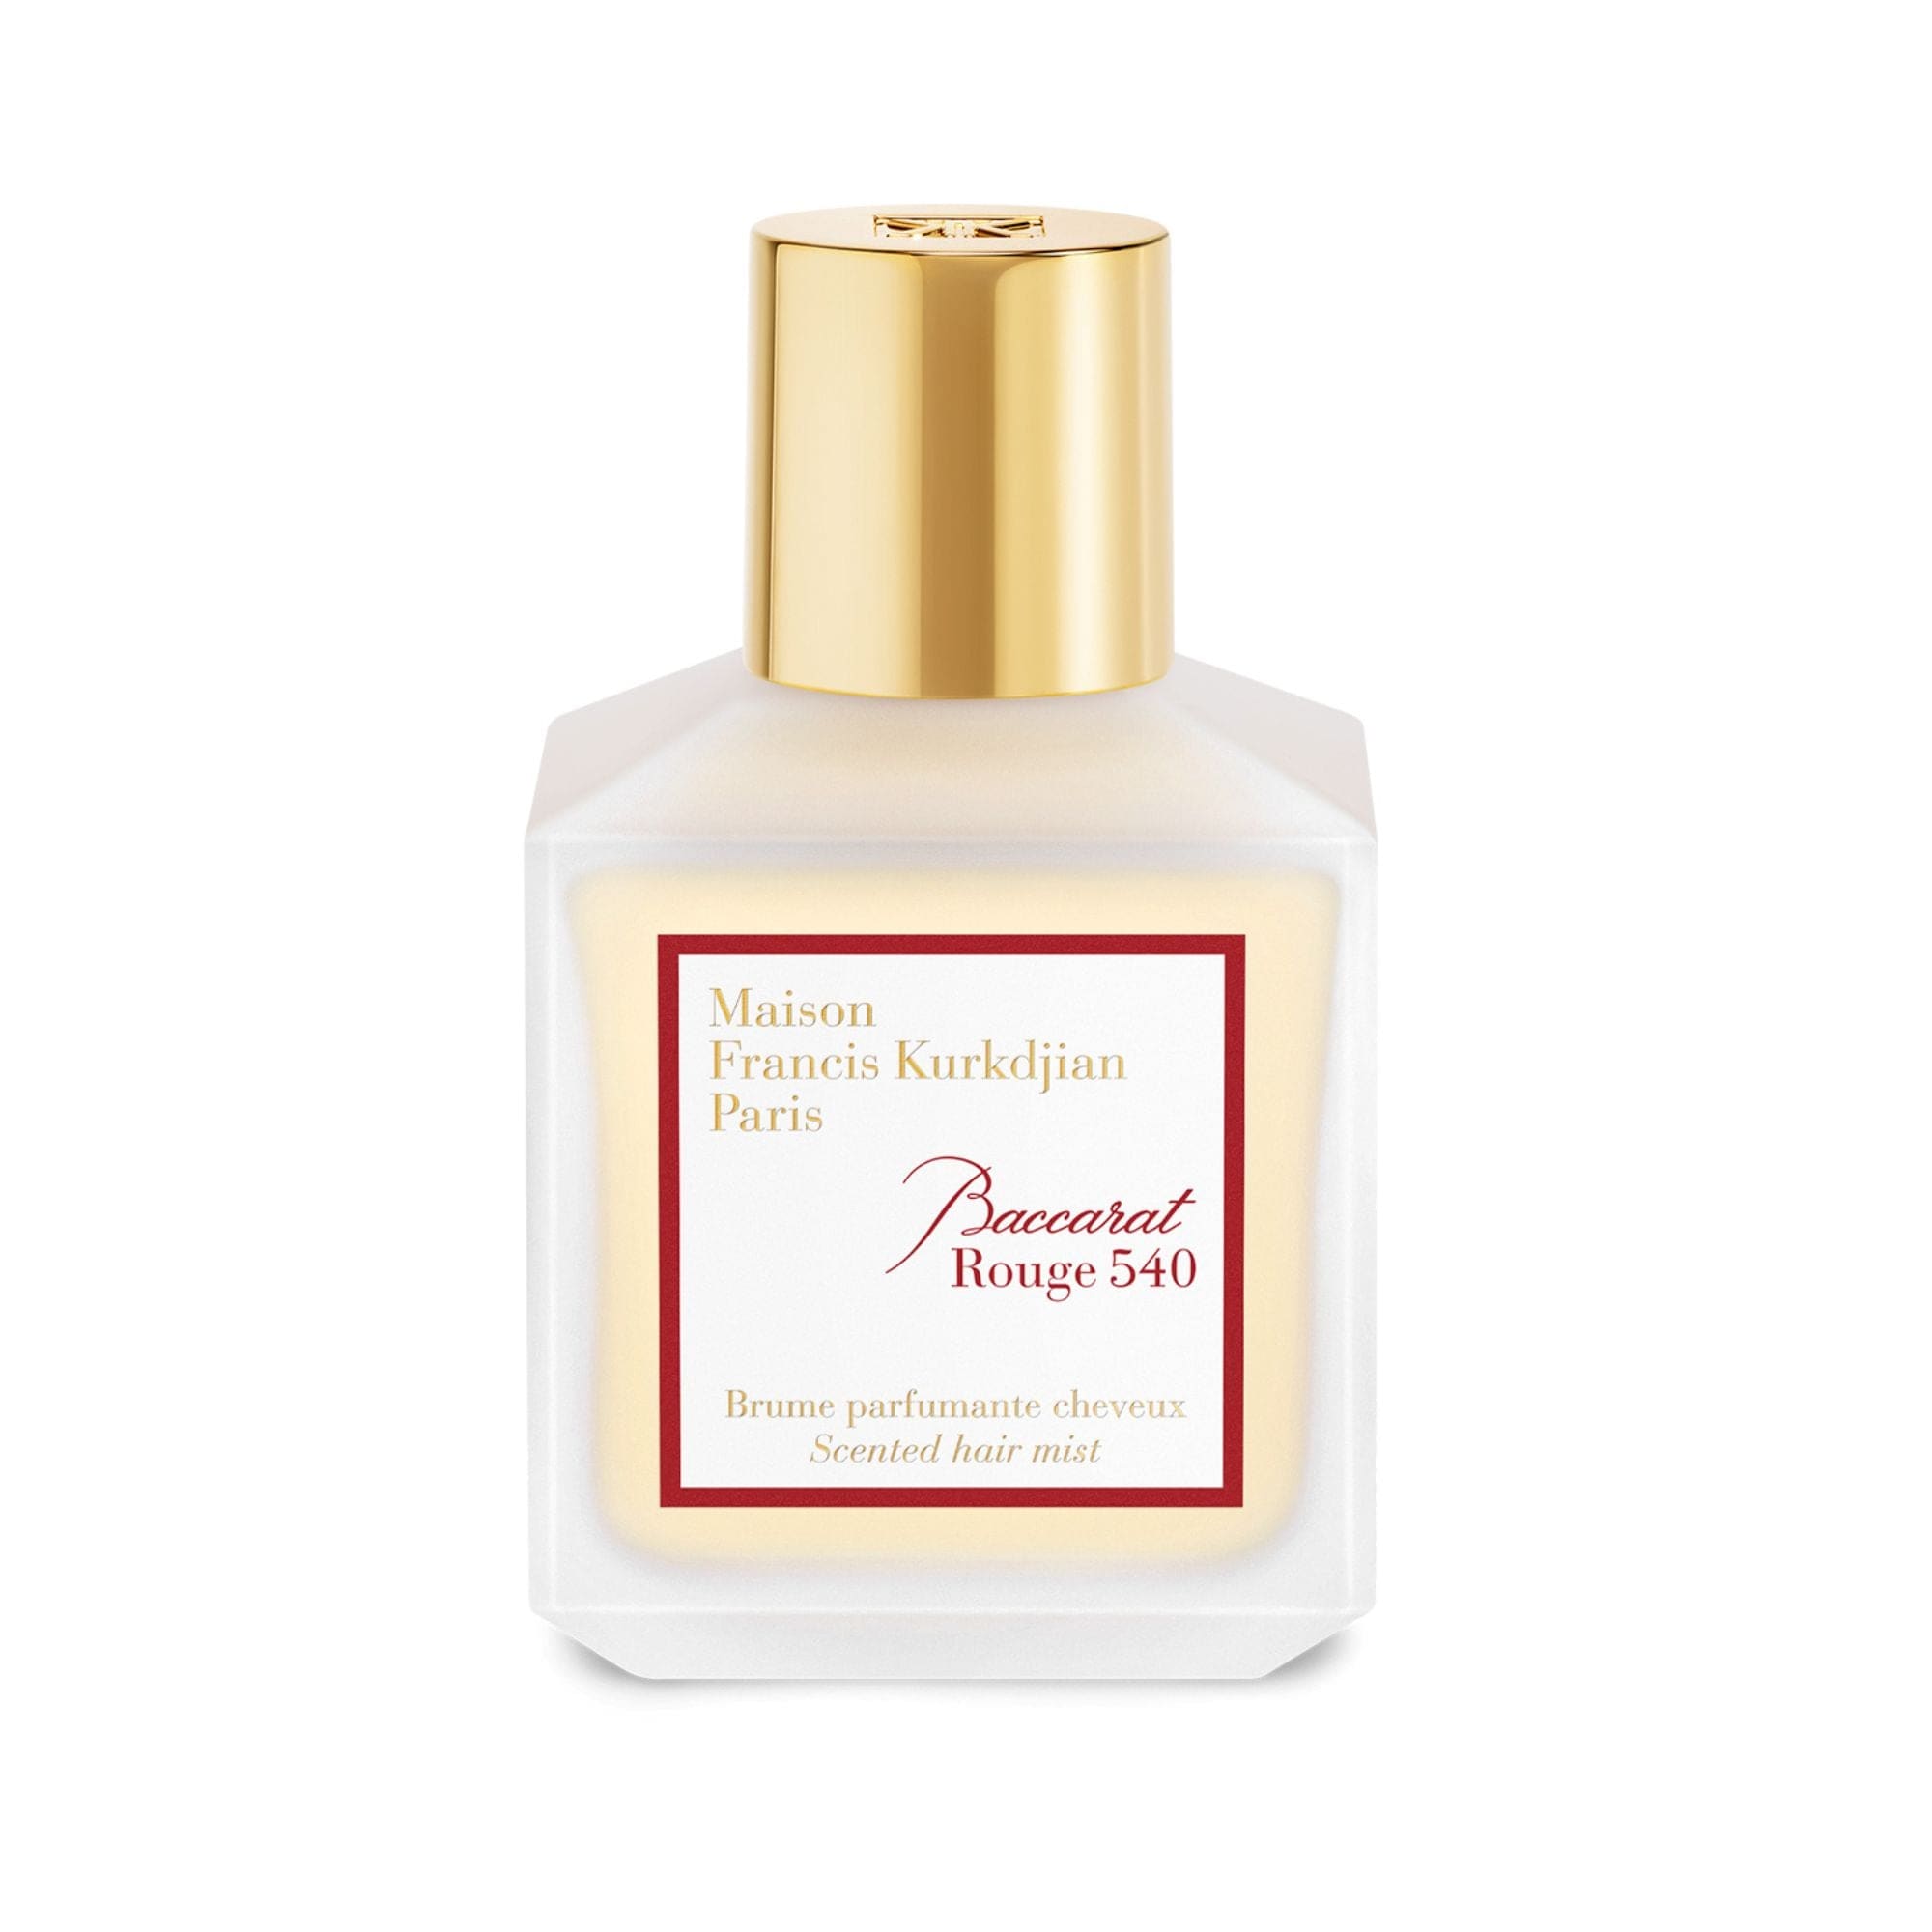 Baccarat Rouge 540 Maison Francis Kurkdjian Hair Perfume